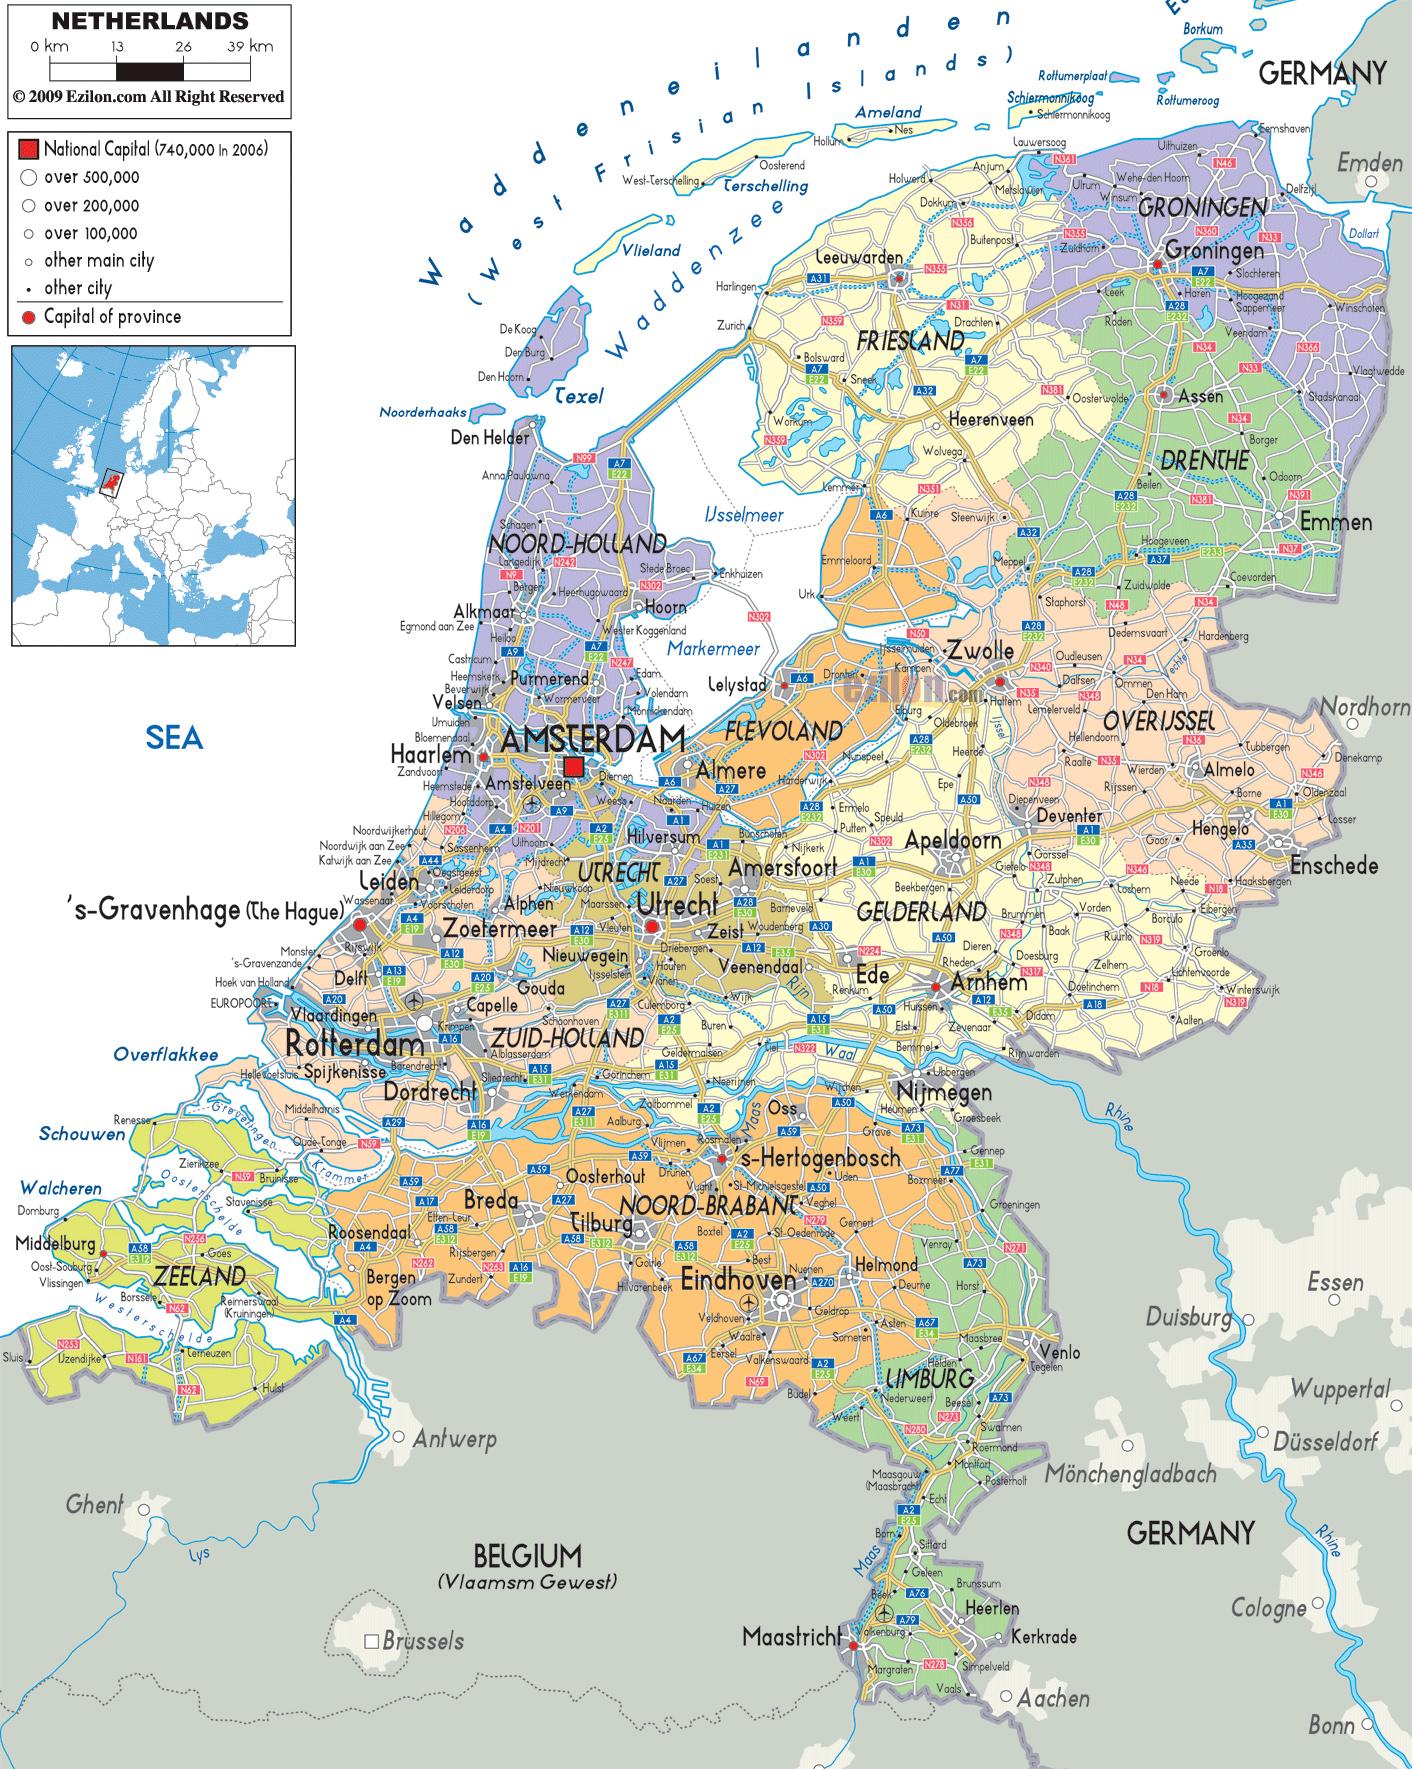 karta europe s gradovima Karta Nizozemske s gradovima   karta Nizozemske s gradovima  karta europe s gradovima